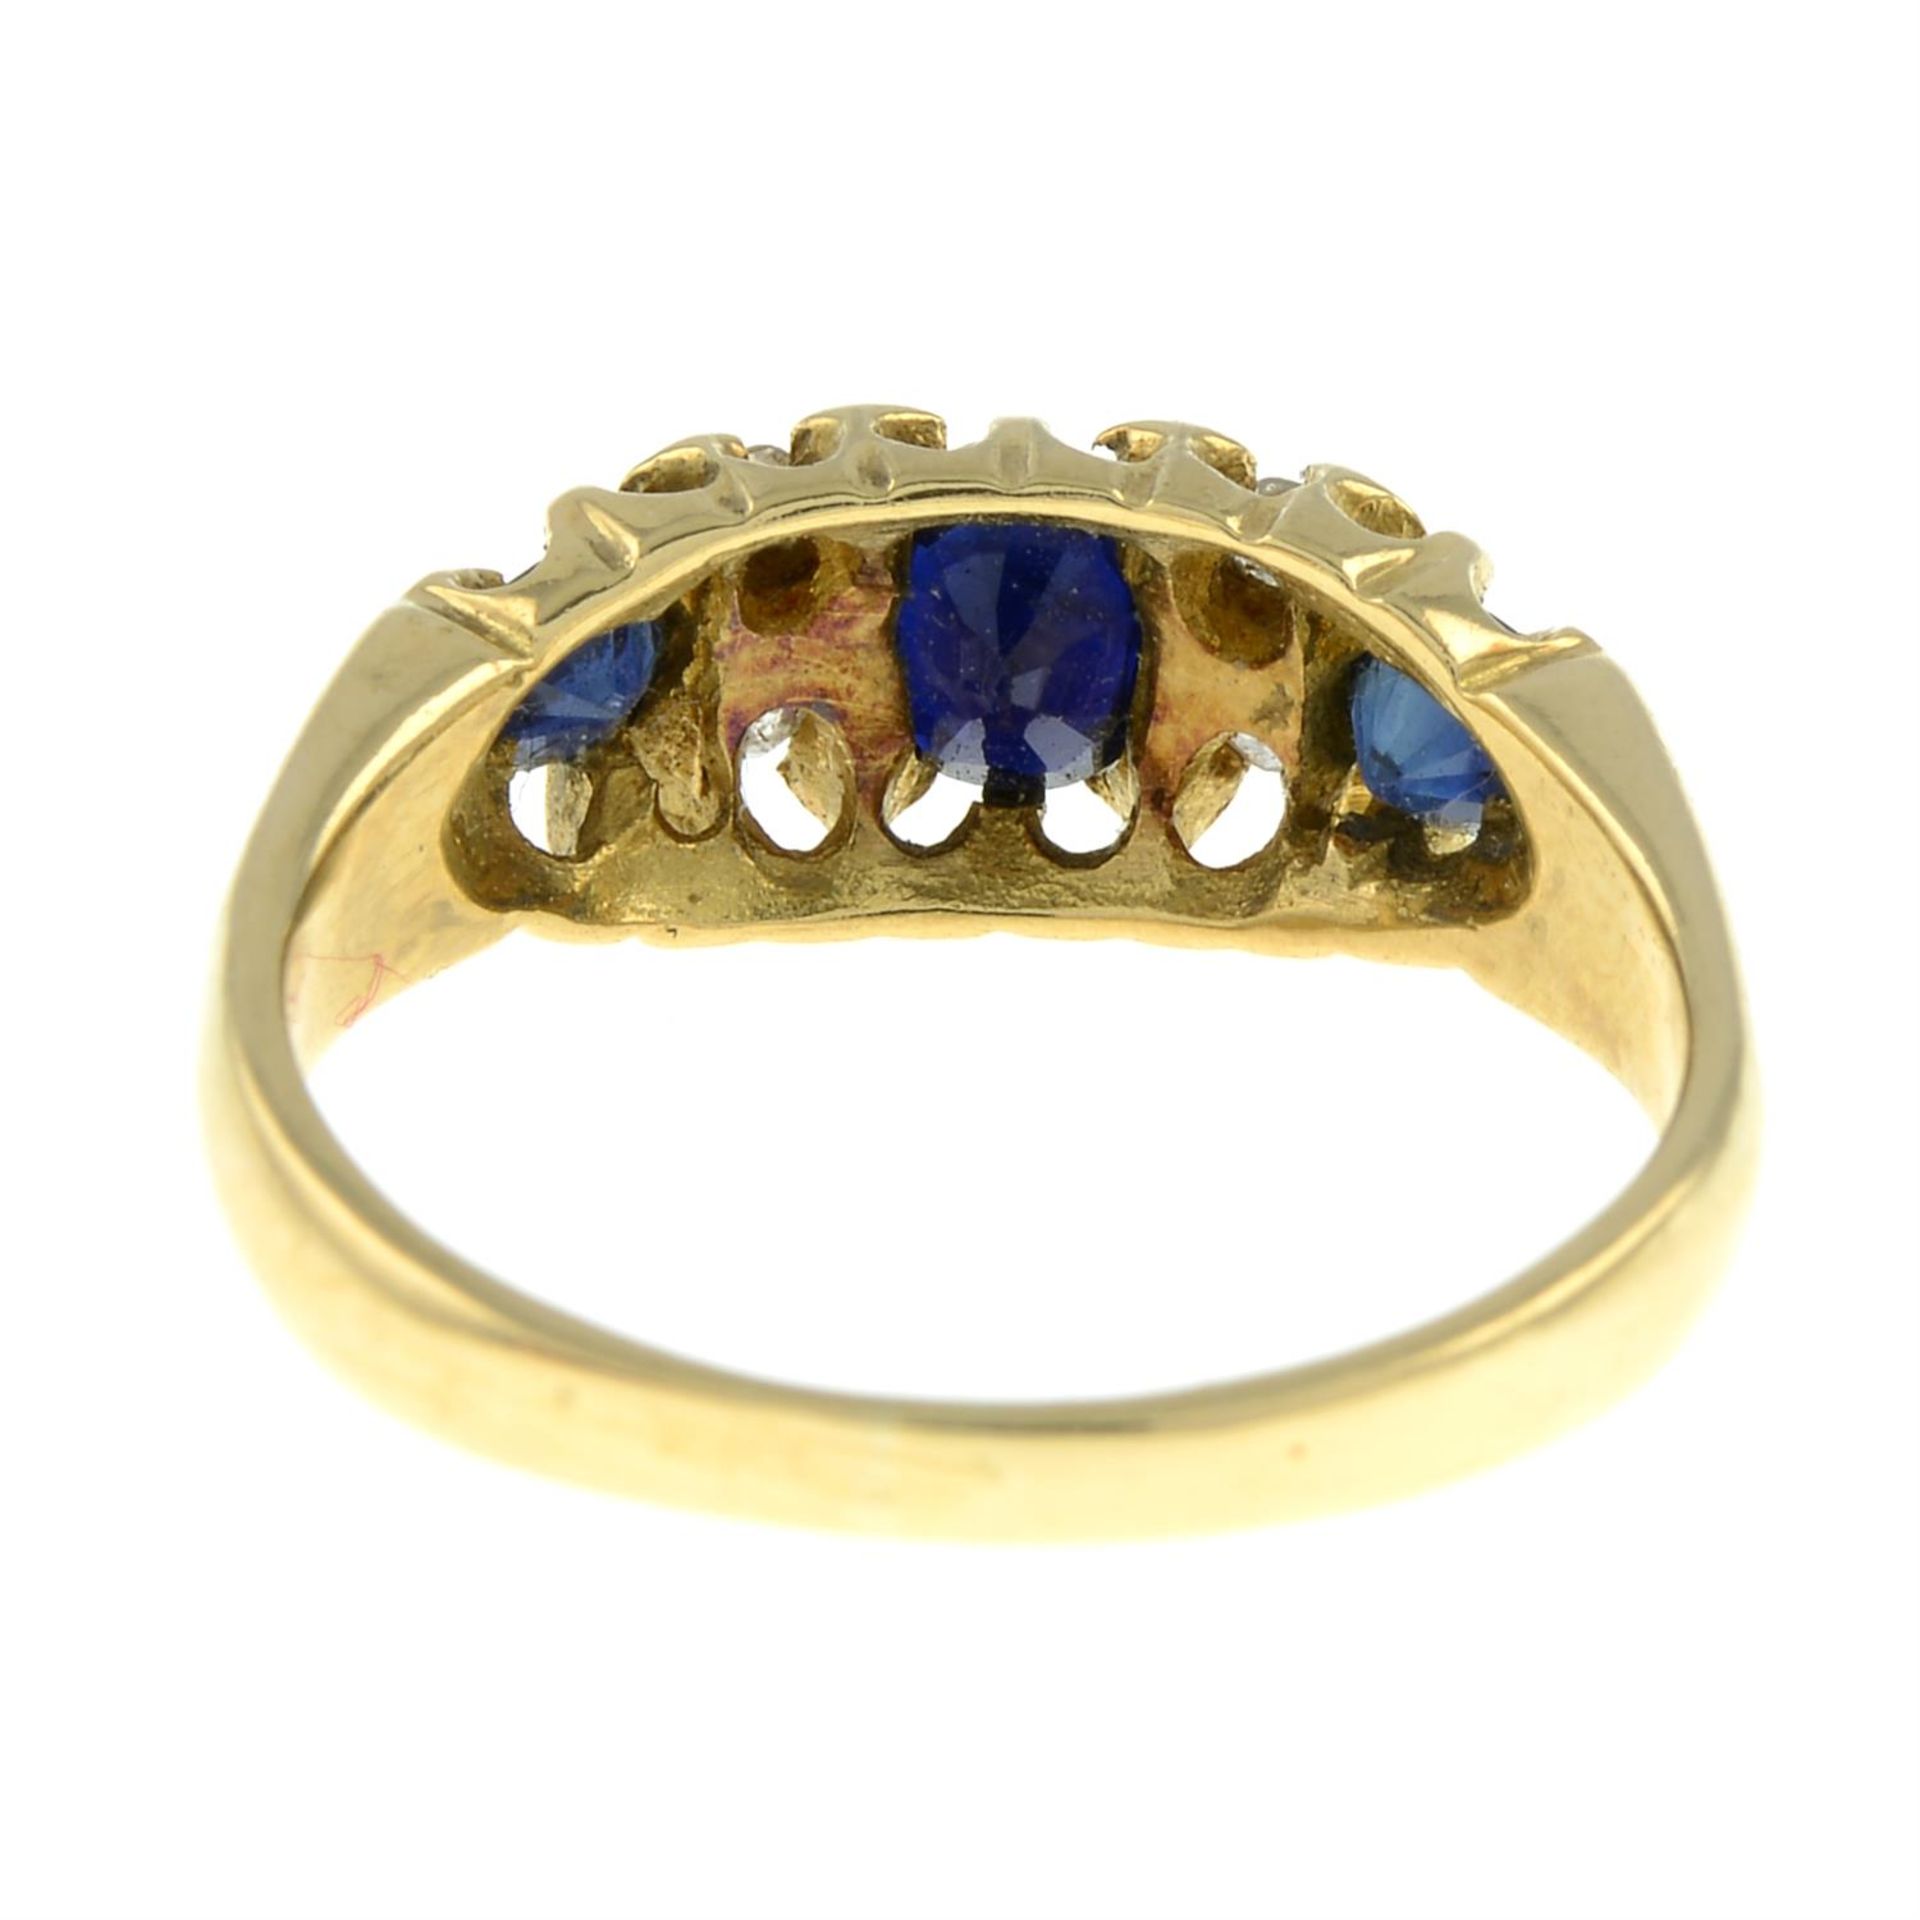 18ct gold diamond & gem-set dress ring - Image 2 of 2